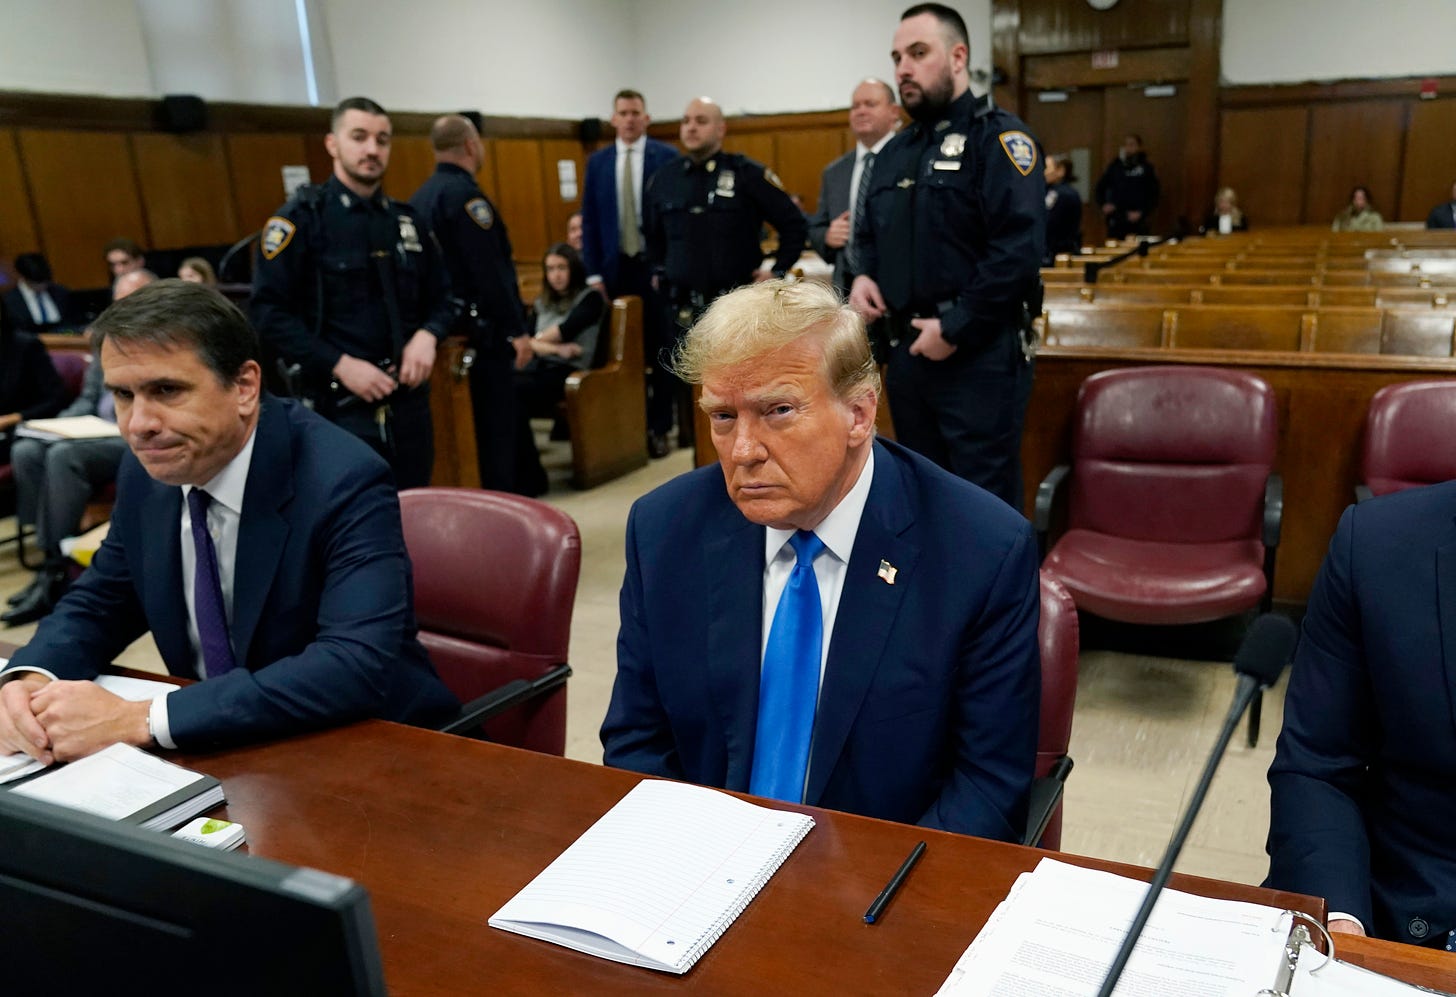 Former President Donald Trump awaits the start of proceedings during jury selection at Manhattan criminal court.